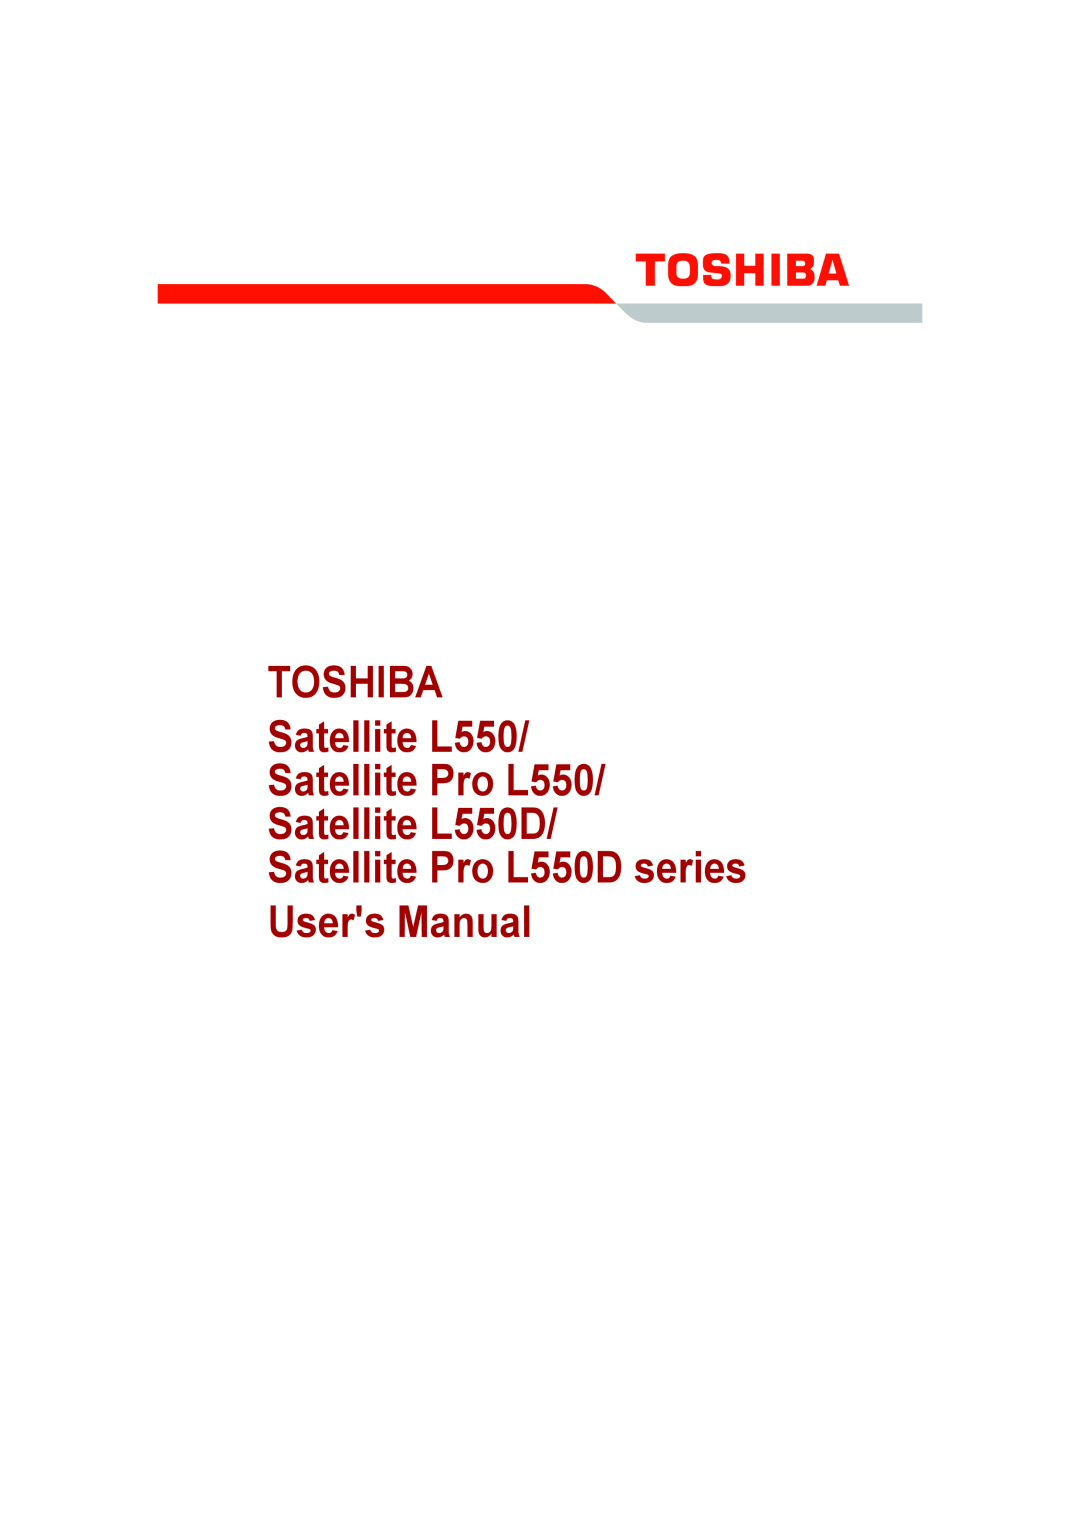 Toshiba toshiba satellite l550/ satellite pro l550/ satellite l550d/ satellite pro l550d series user manual 